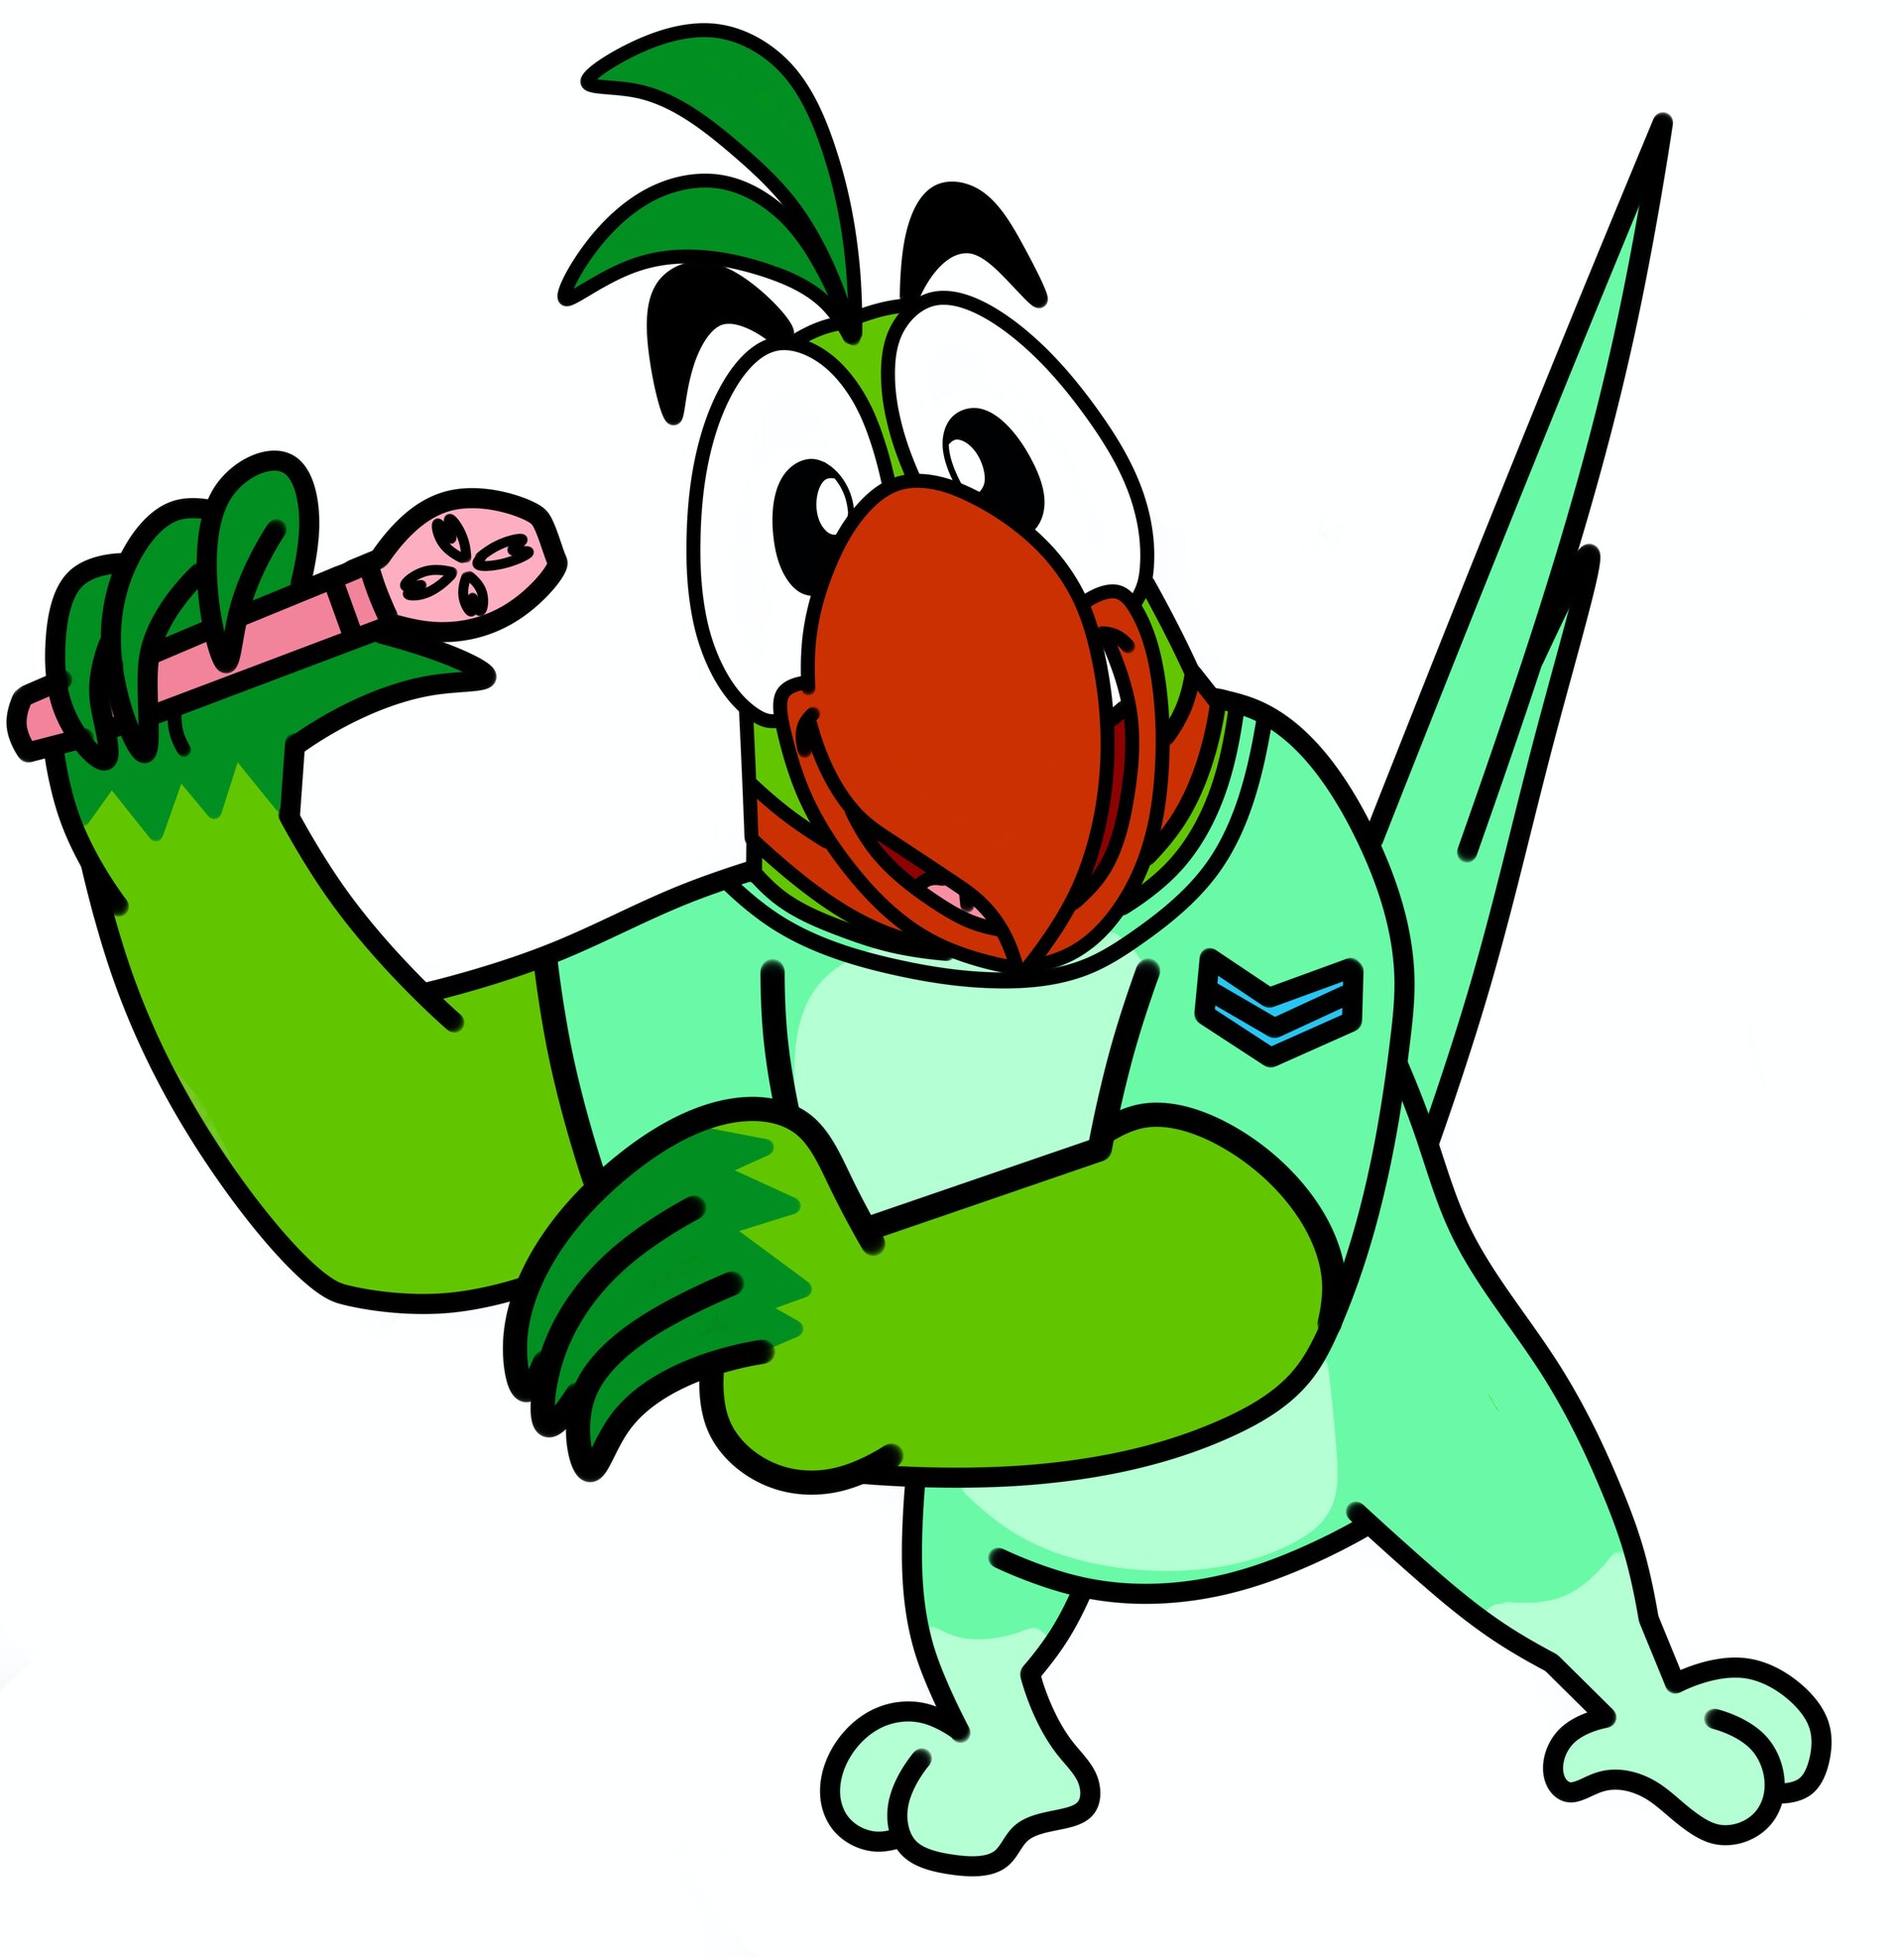 ArtStation - dog a tat the rat a tat popat parrot 🐦 suite kangaroo green  soldier character by honey bunny jholmaal